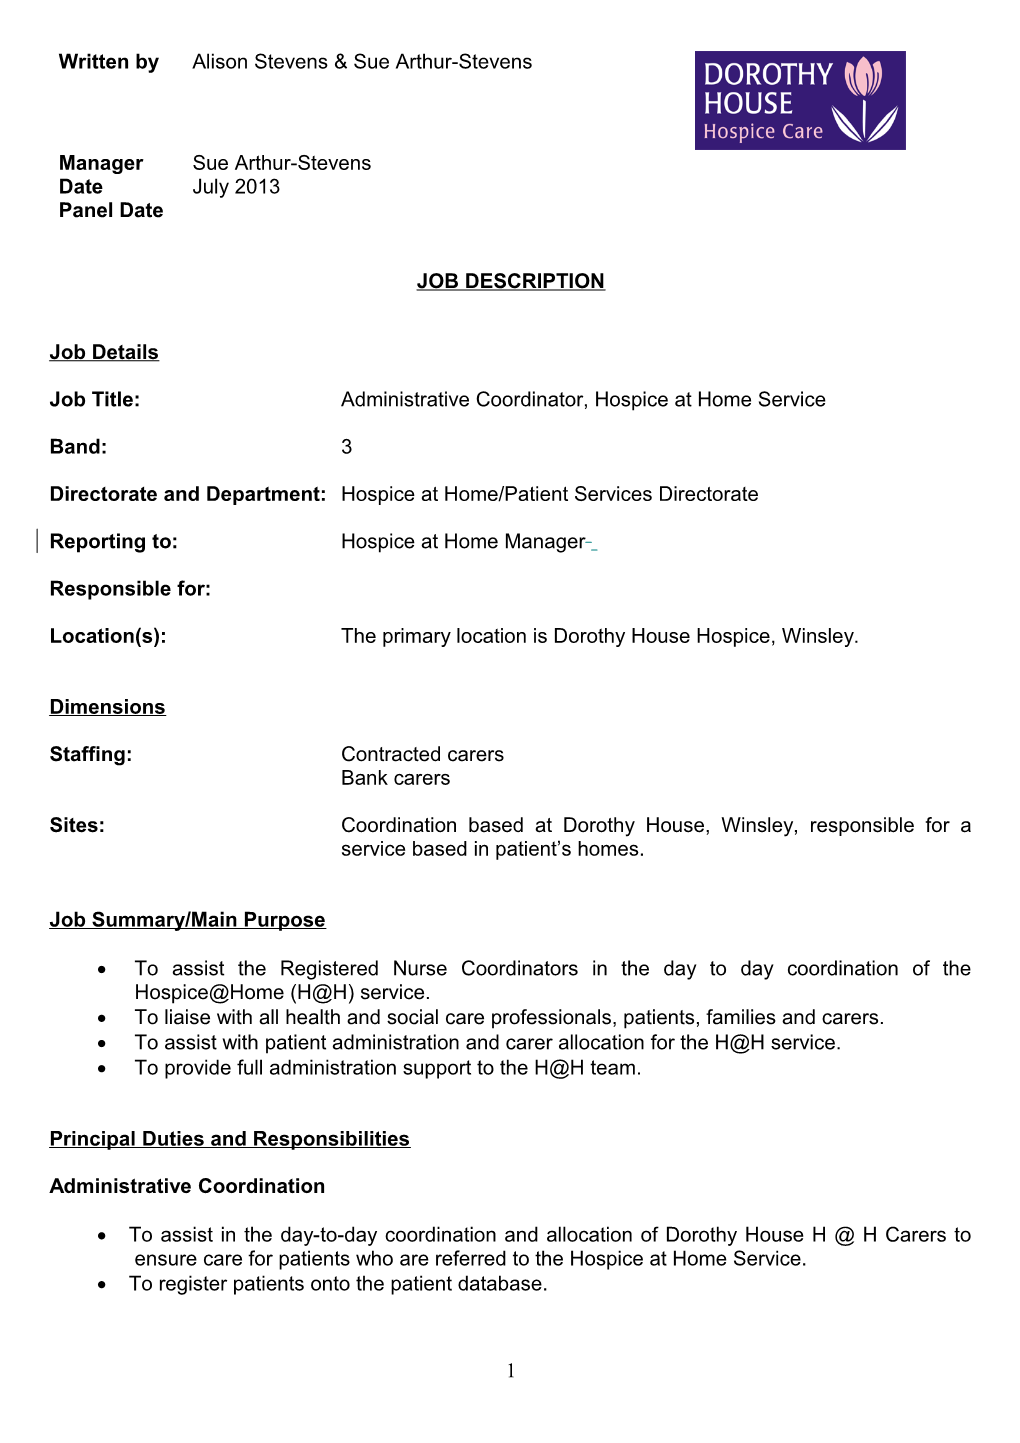 Job Title:Administrativecoordinator, Hospice at Home Service